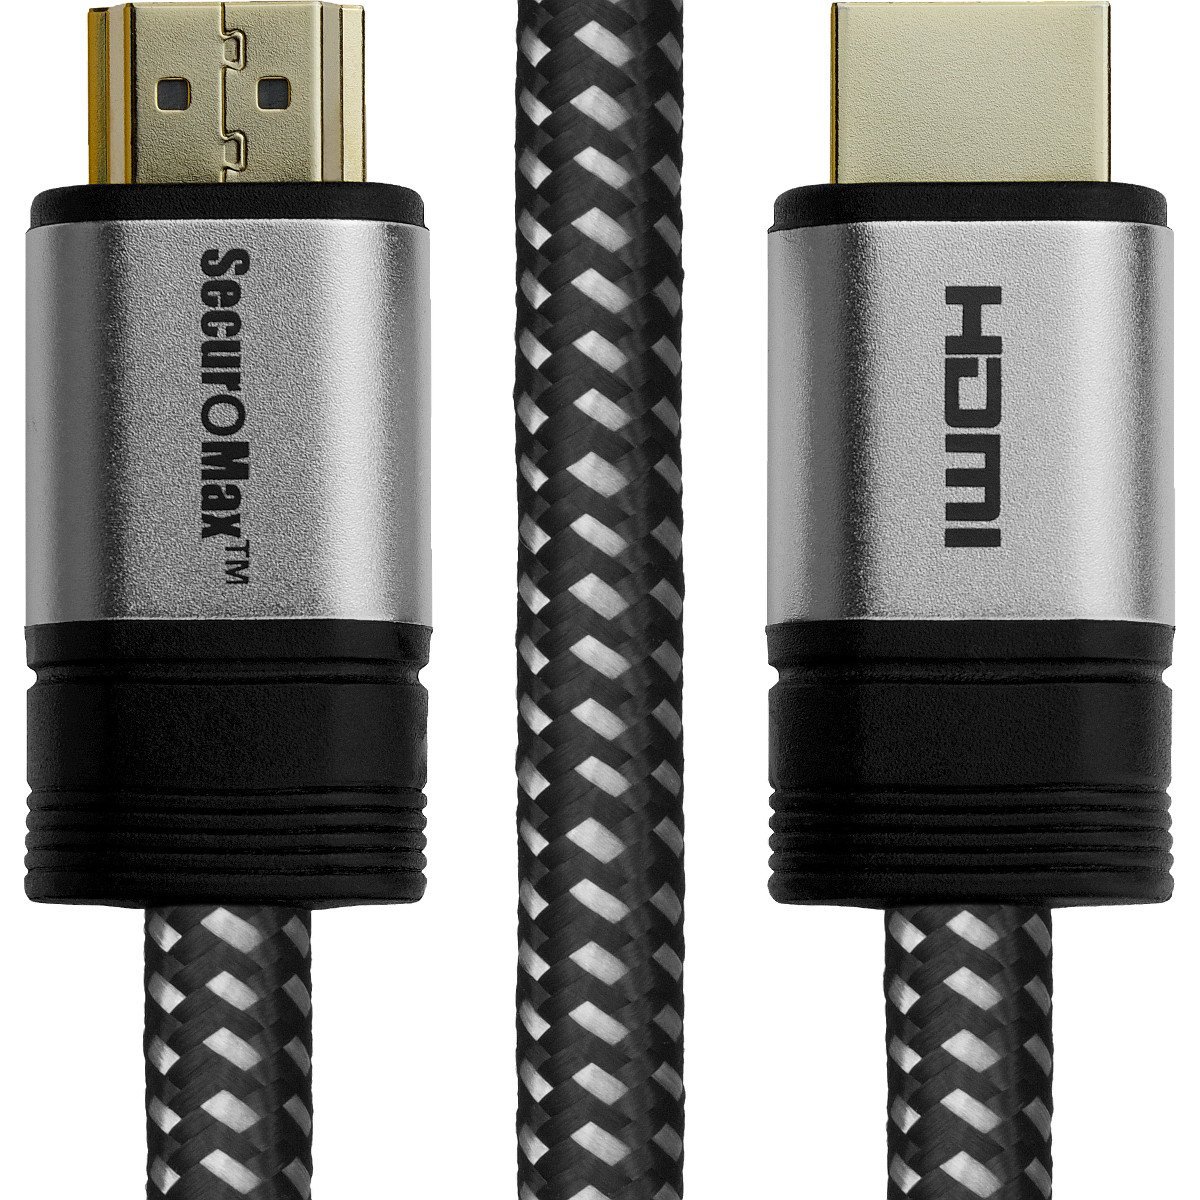 SecureOMax HDMI Cable